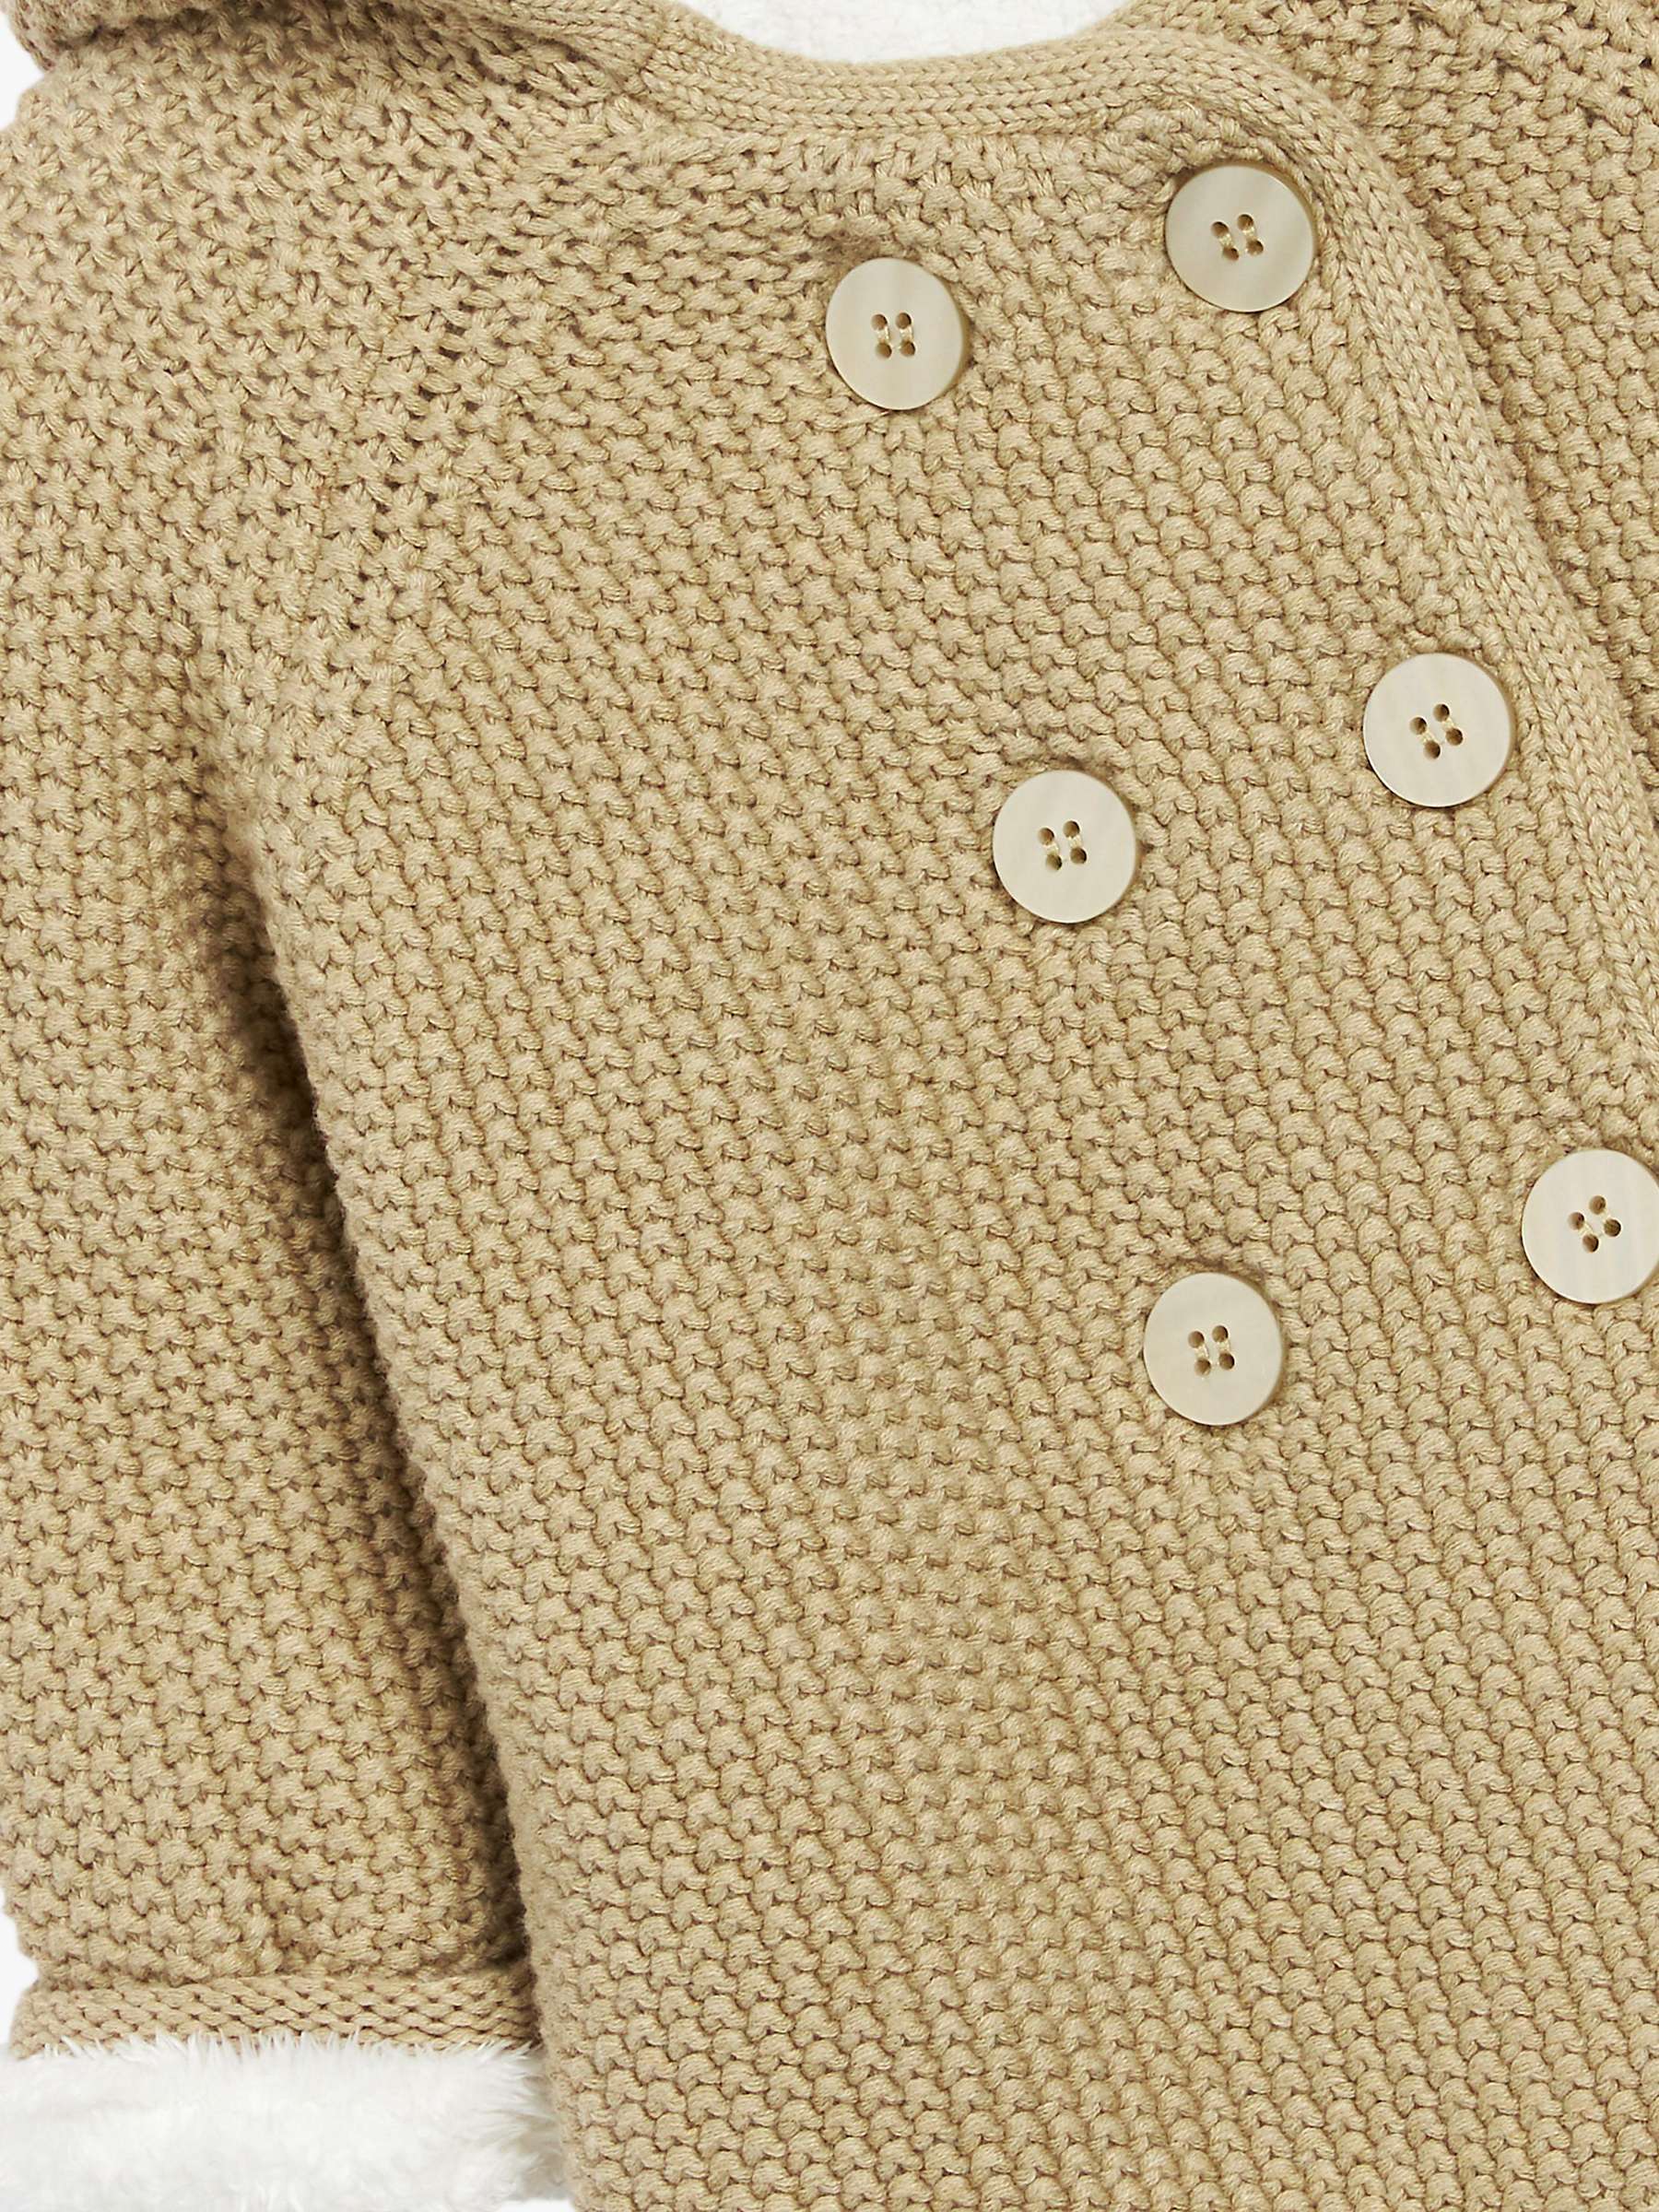 Buy The Little Tailor Kids' Plush Lined Knitted Pram Jacket Online at johnlewis.com